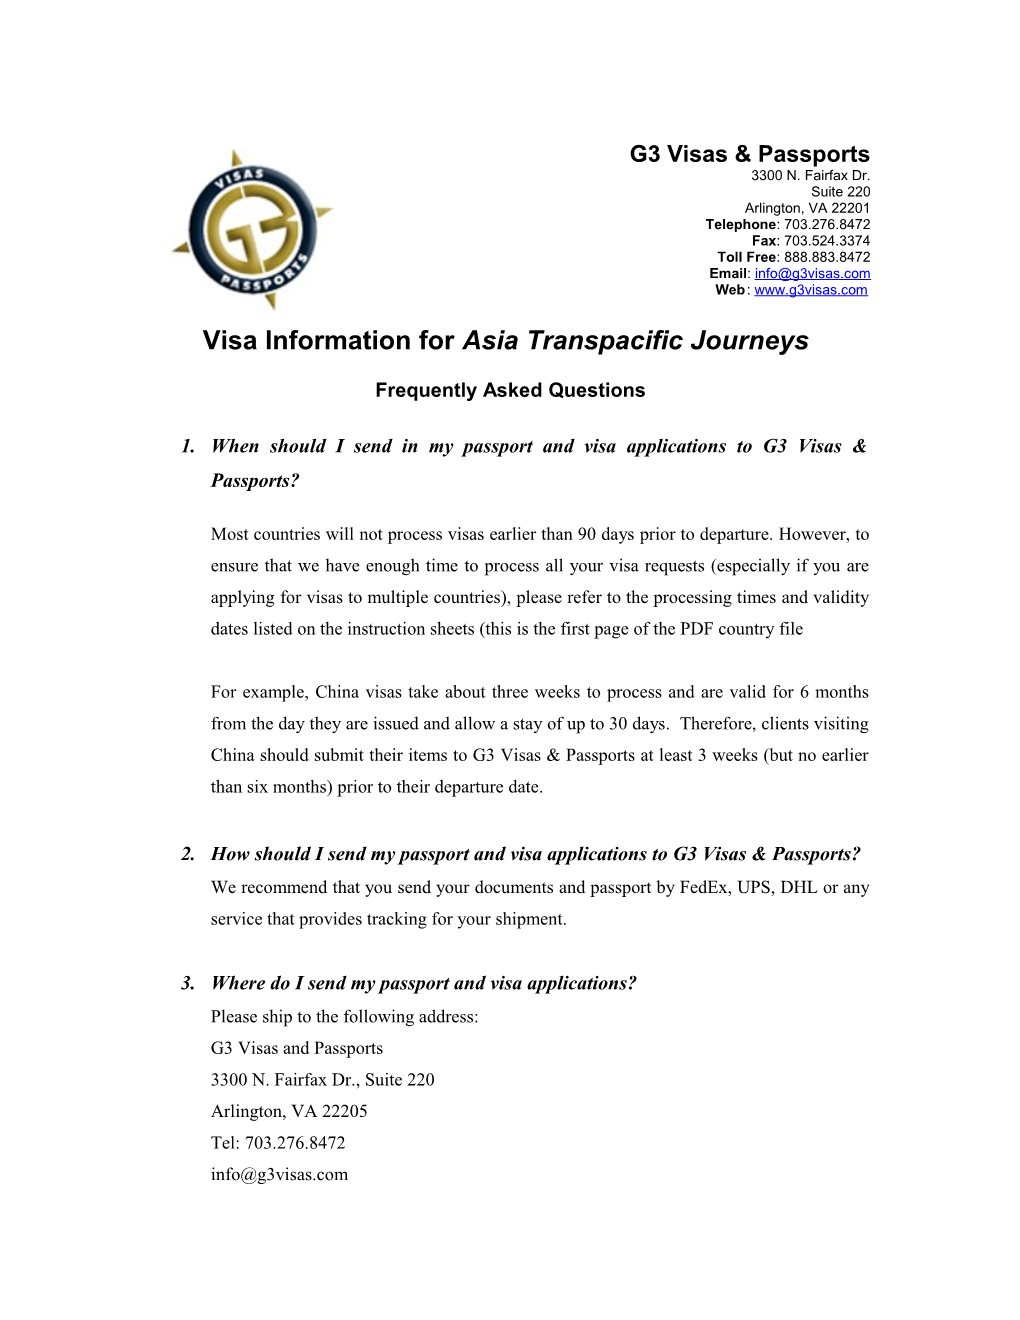 Visa Information Forasia Transpacific Journeys